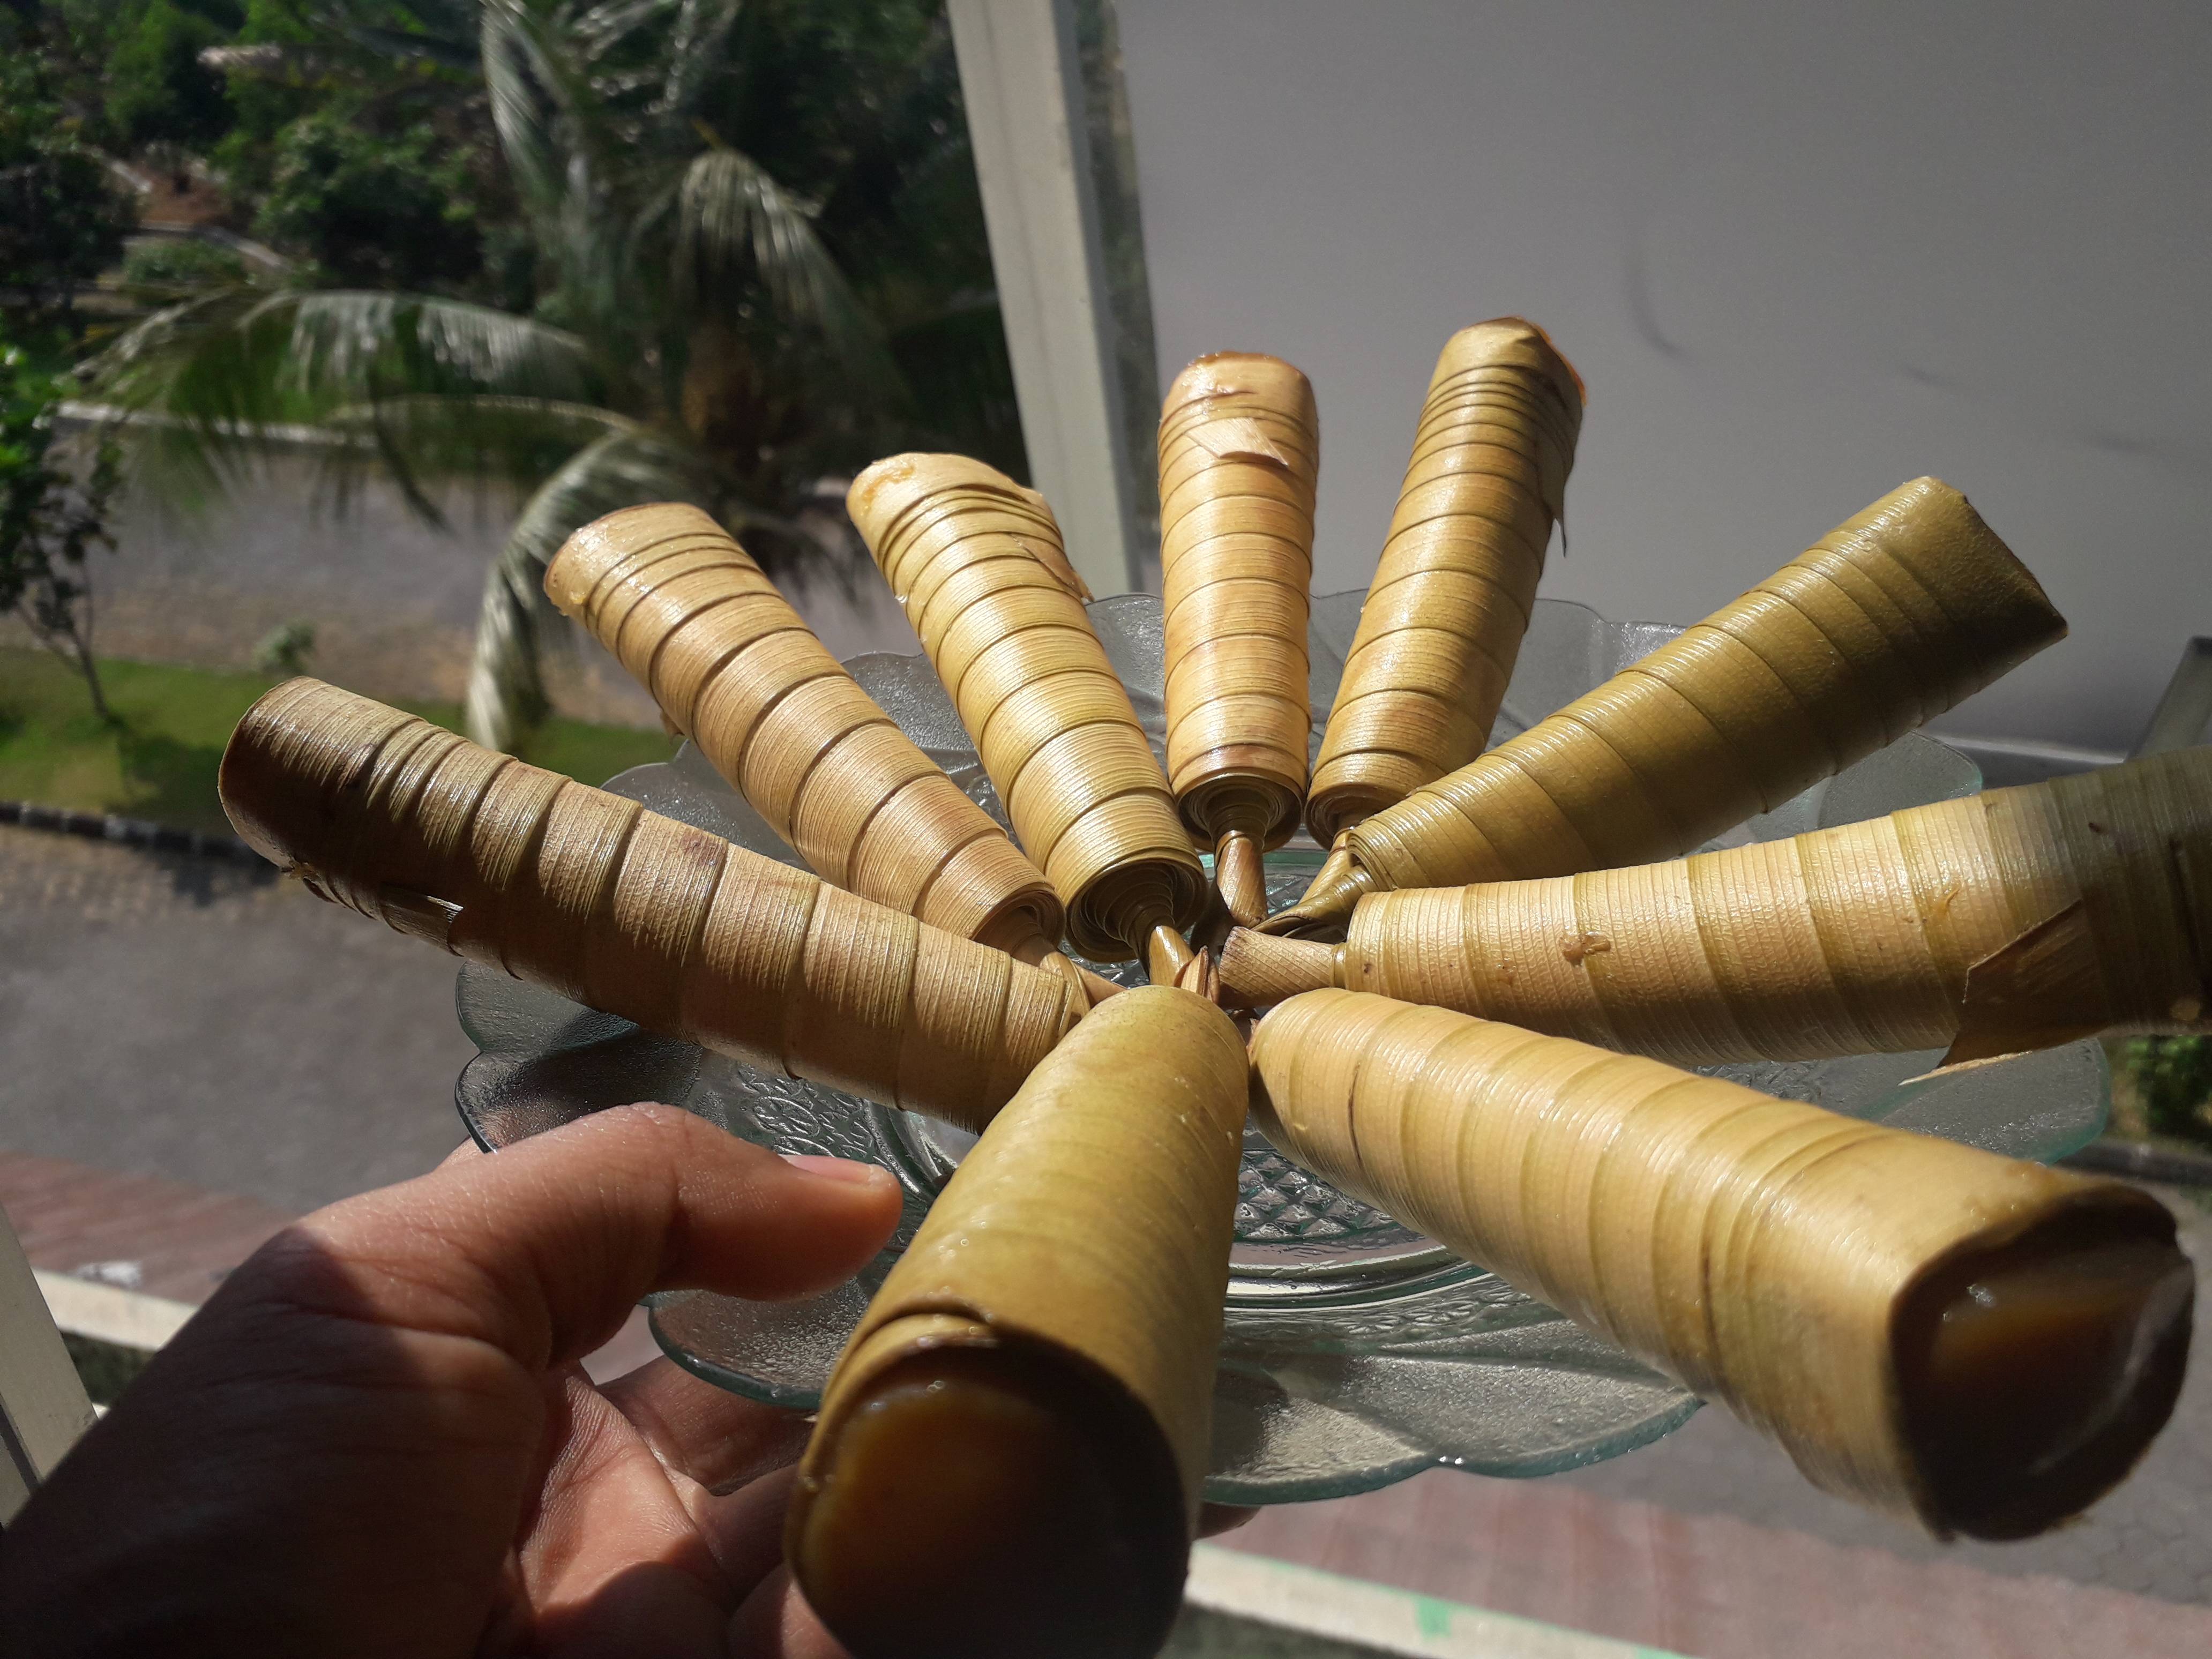 Bungkus Celorot yang Unik (c) Sri Yana Sari/Travelingyuk